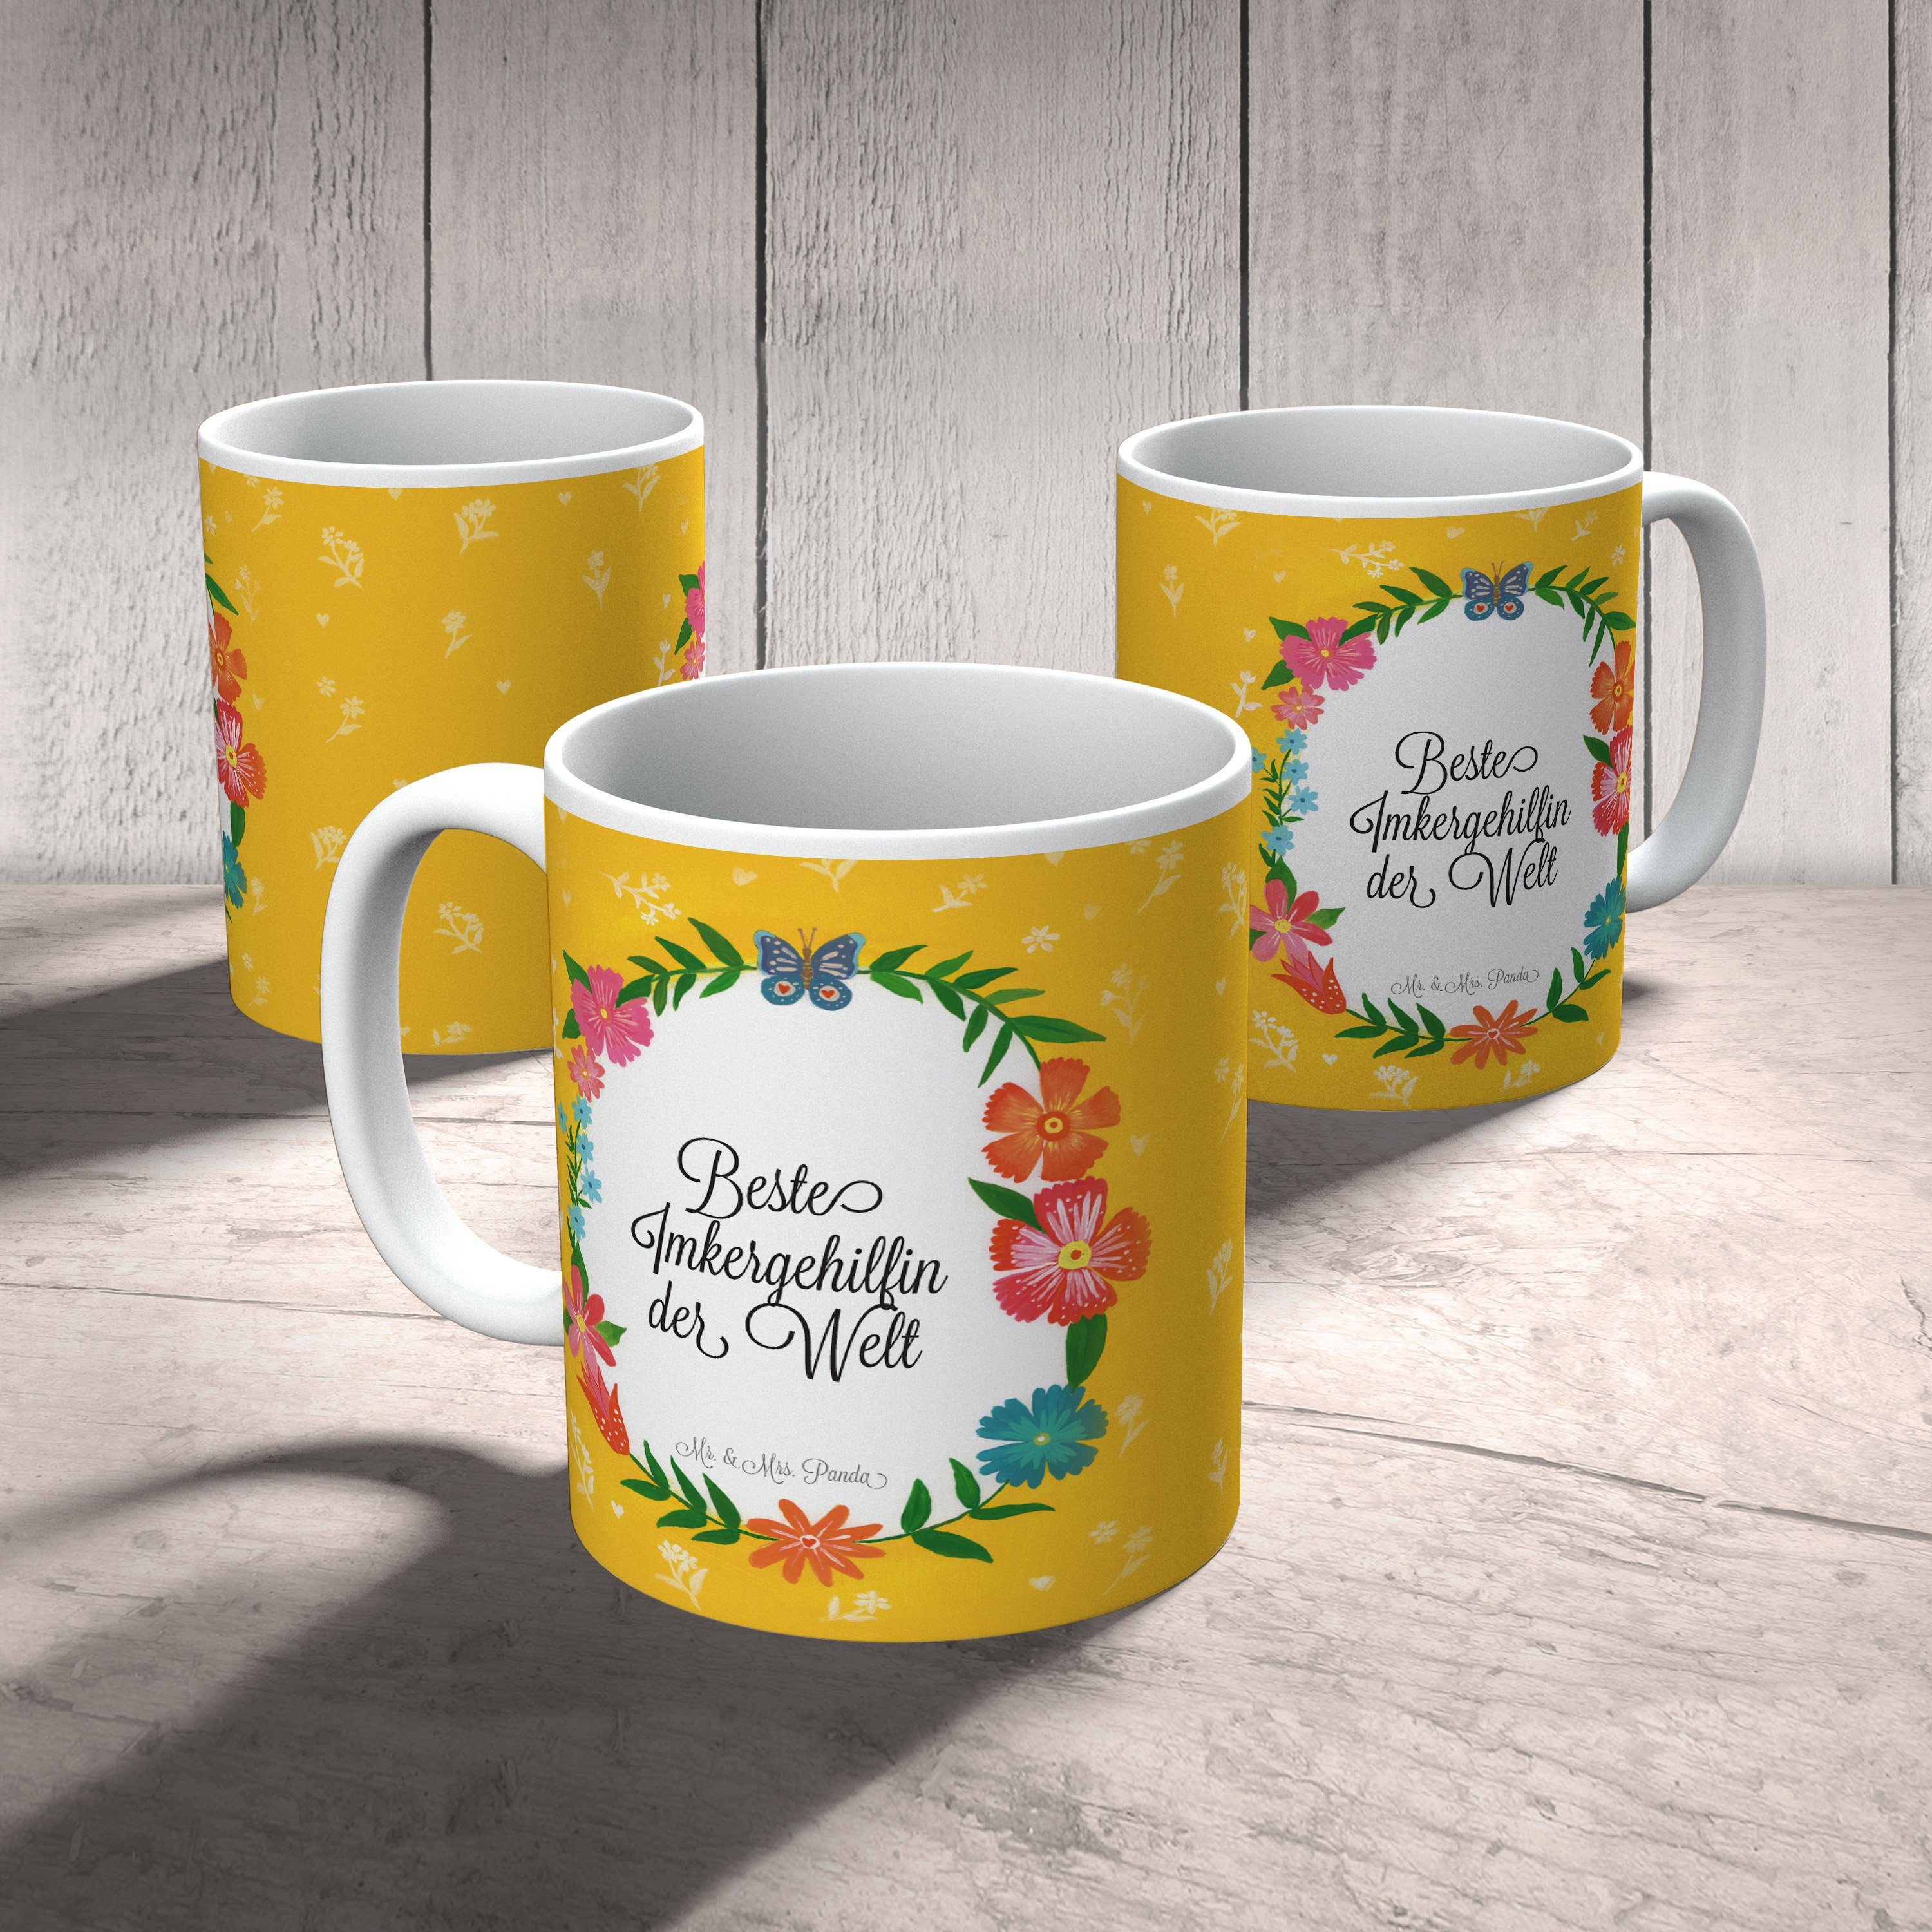 Mr. & Mrs. Keramik Kaffeetasse, Panda Becher, Gratulation, - Spr, Tasse Geschenk, Tasse Imkergehilfin